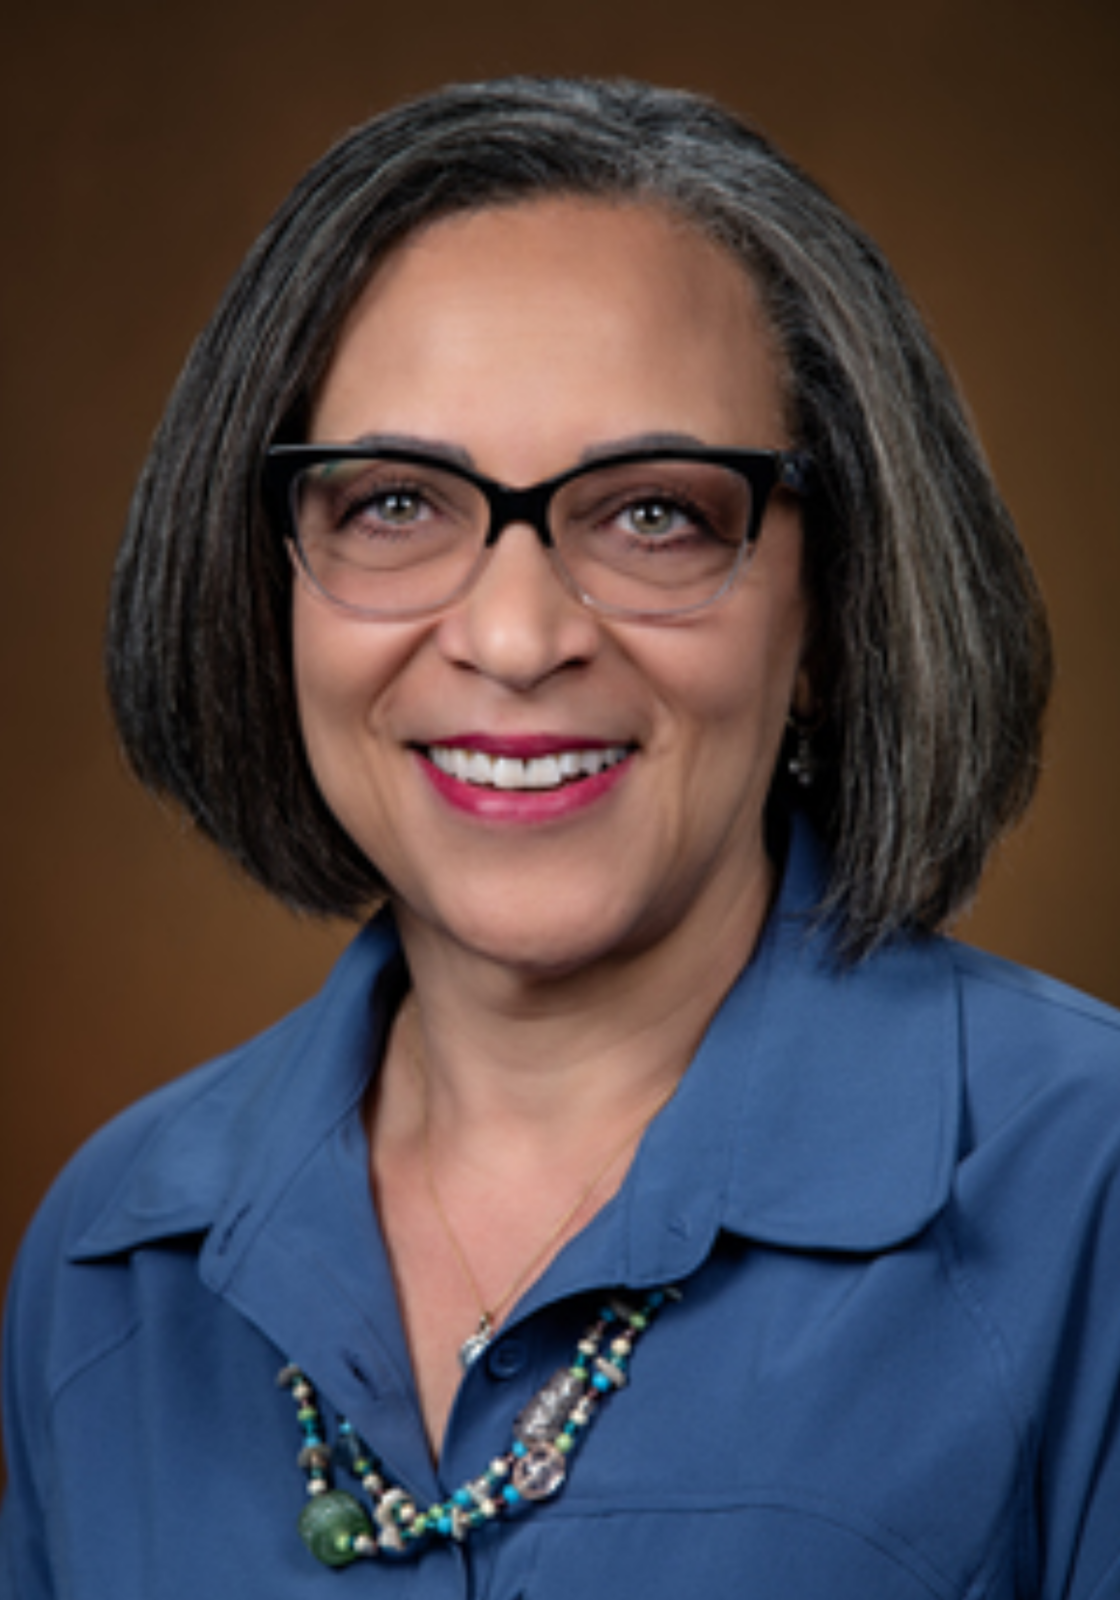 Dr. Denise Mills, DIDM Board Member